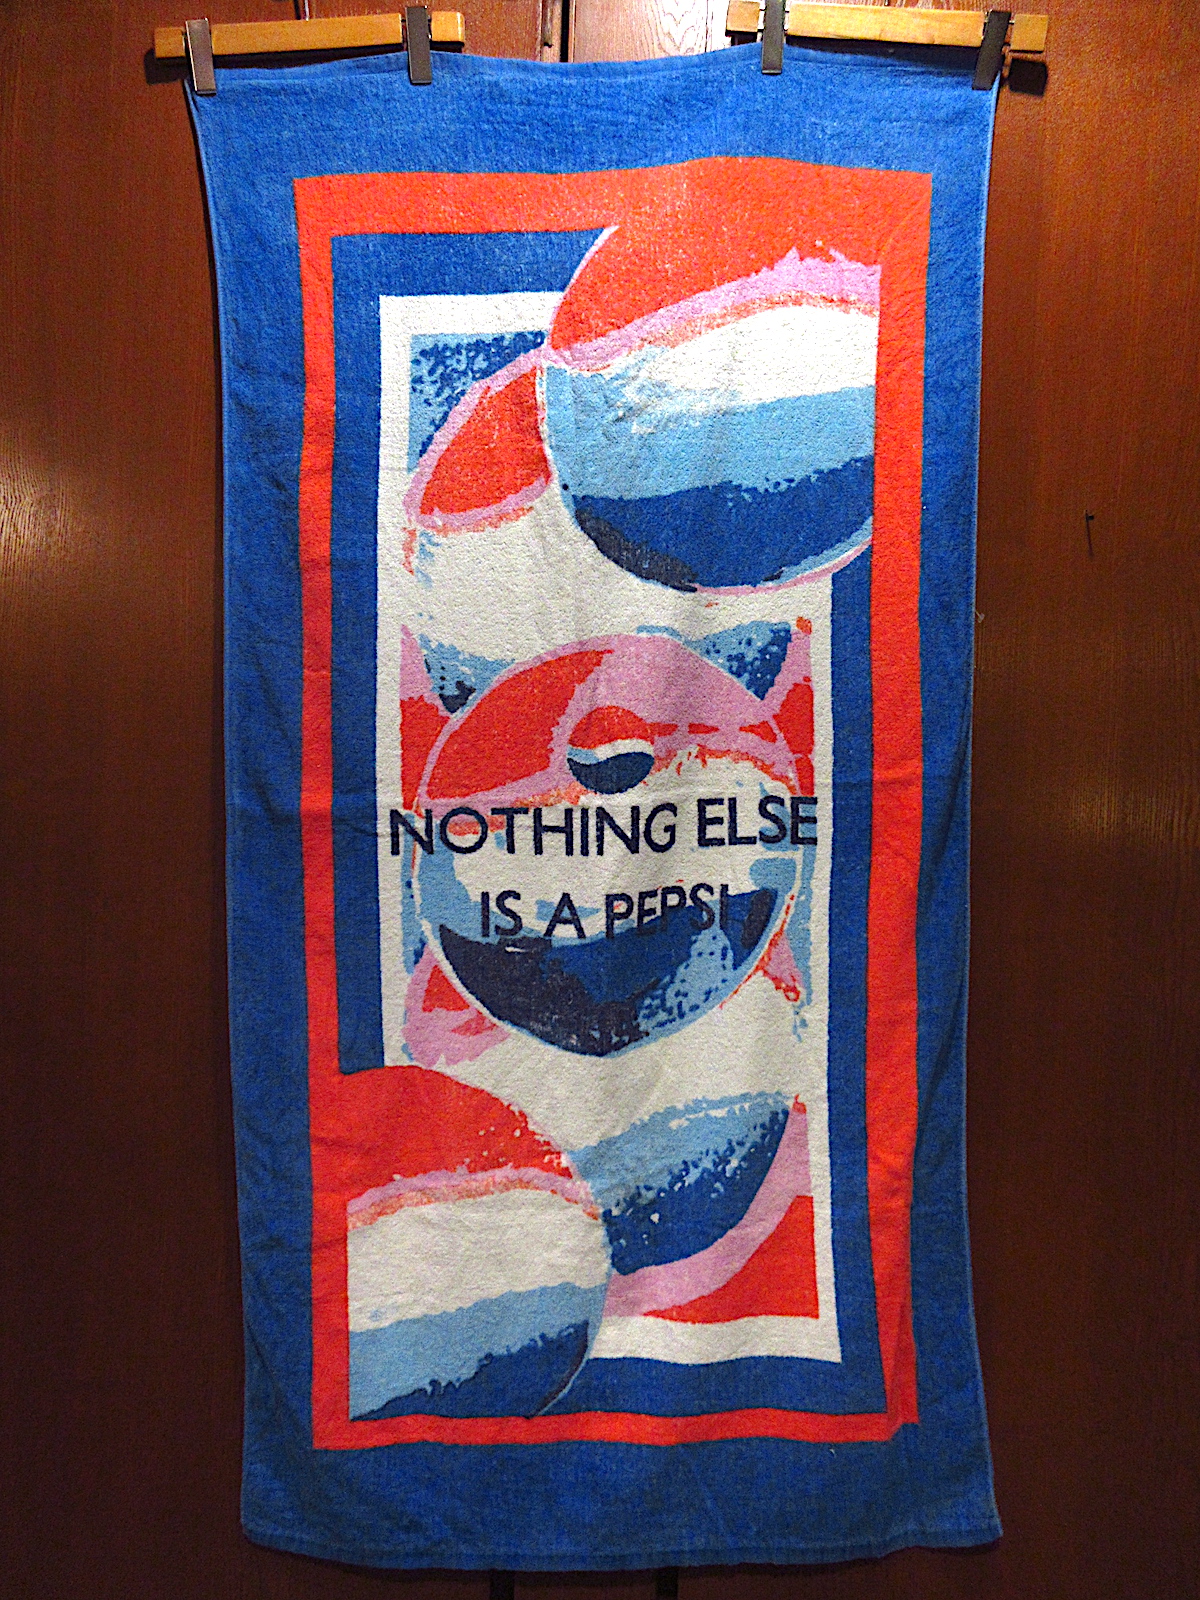  Vintage 80's90's*NOTHING ELSE IS A PEPSI print beach towel *231107c4-fbr 1980s1990s Pepsi bath towel miscellaneous goods 